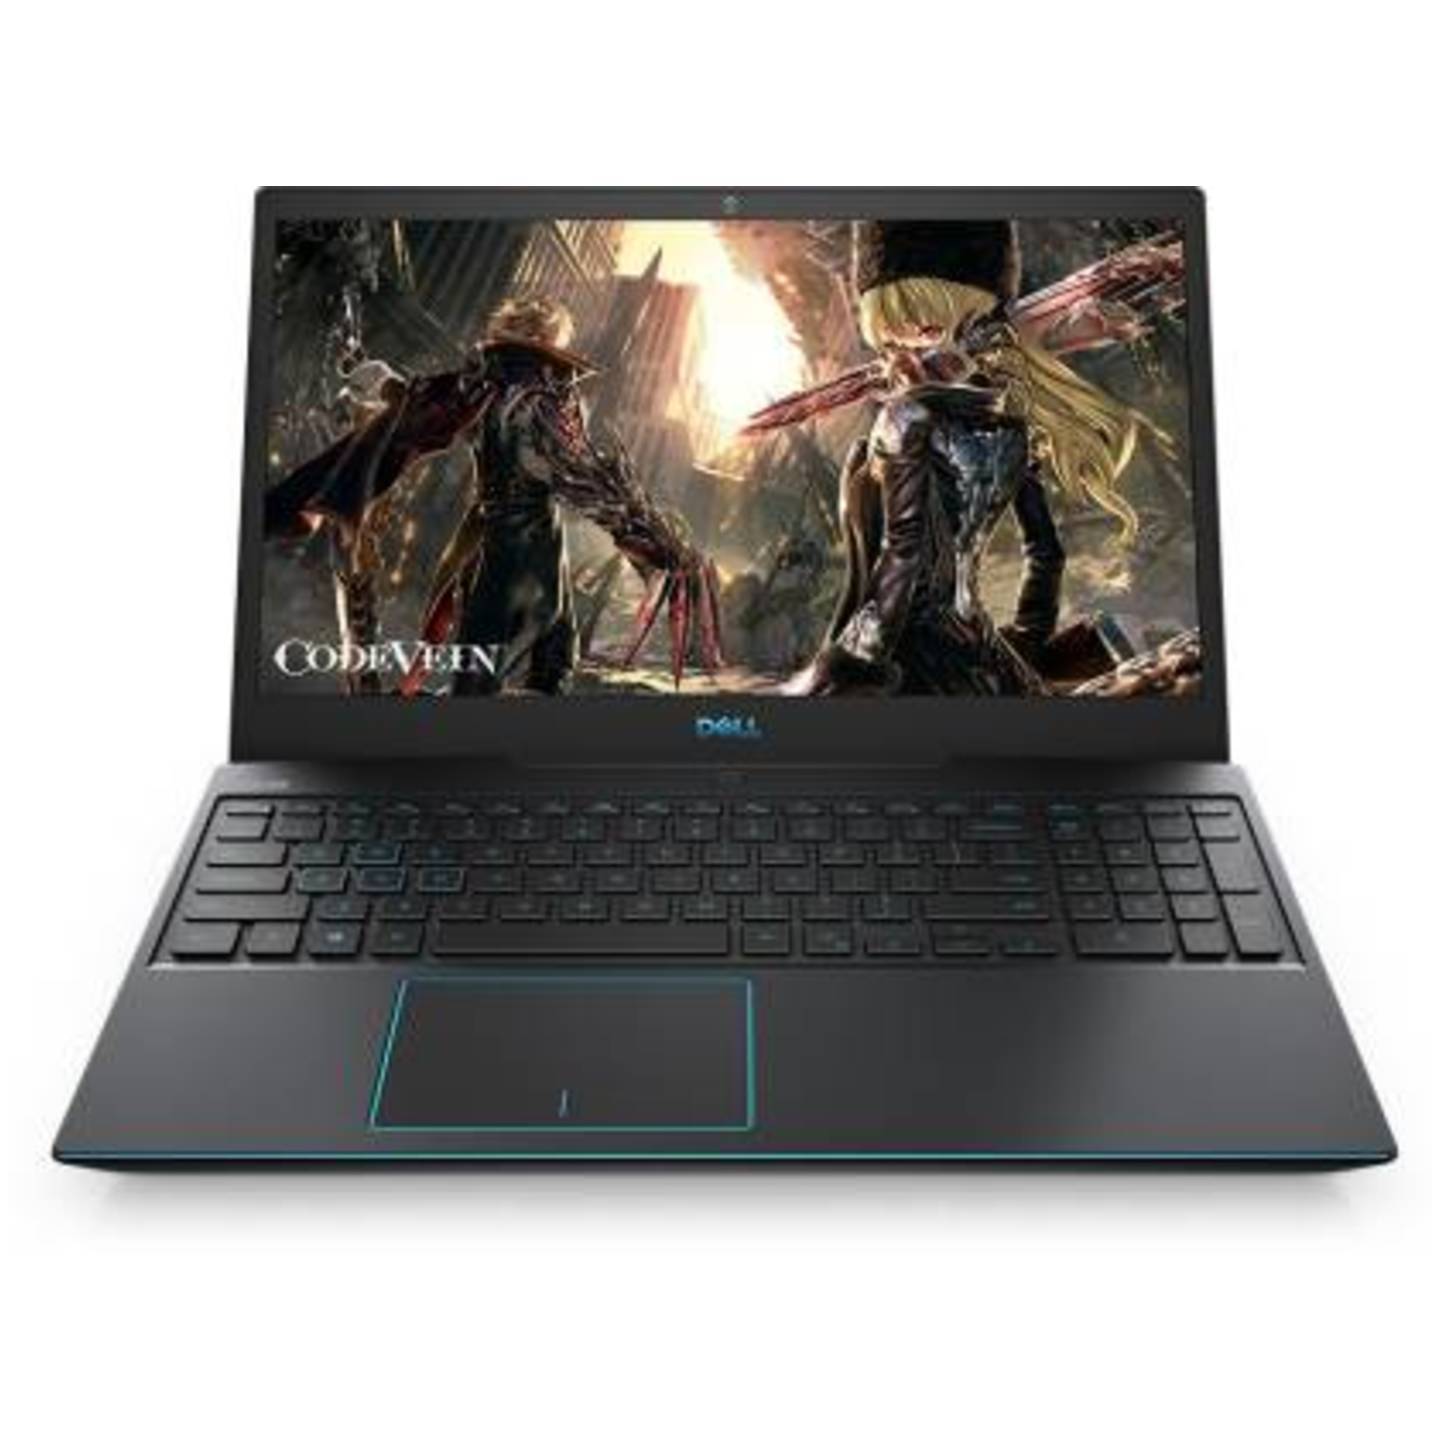 DELL G3 Core i5 10th Gen - (8 GB/1 TB HDD/256 GB SSD/Windows 10 Home/4 GB Graphics/NVIDIA GeForce GTX 1650) G3 3500 Gaming Laptop  (15.6 inch, Eclipse Black, 2.3 kg)